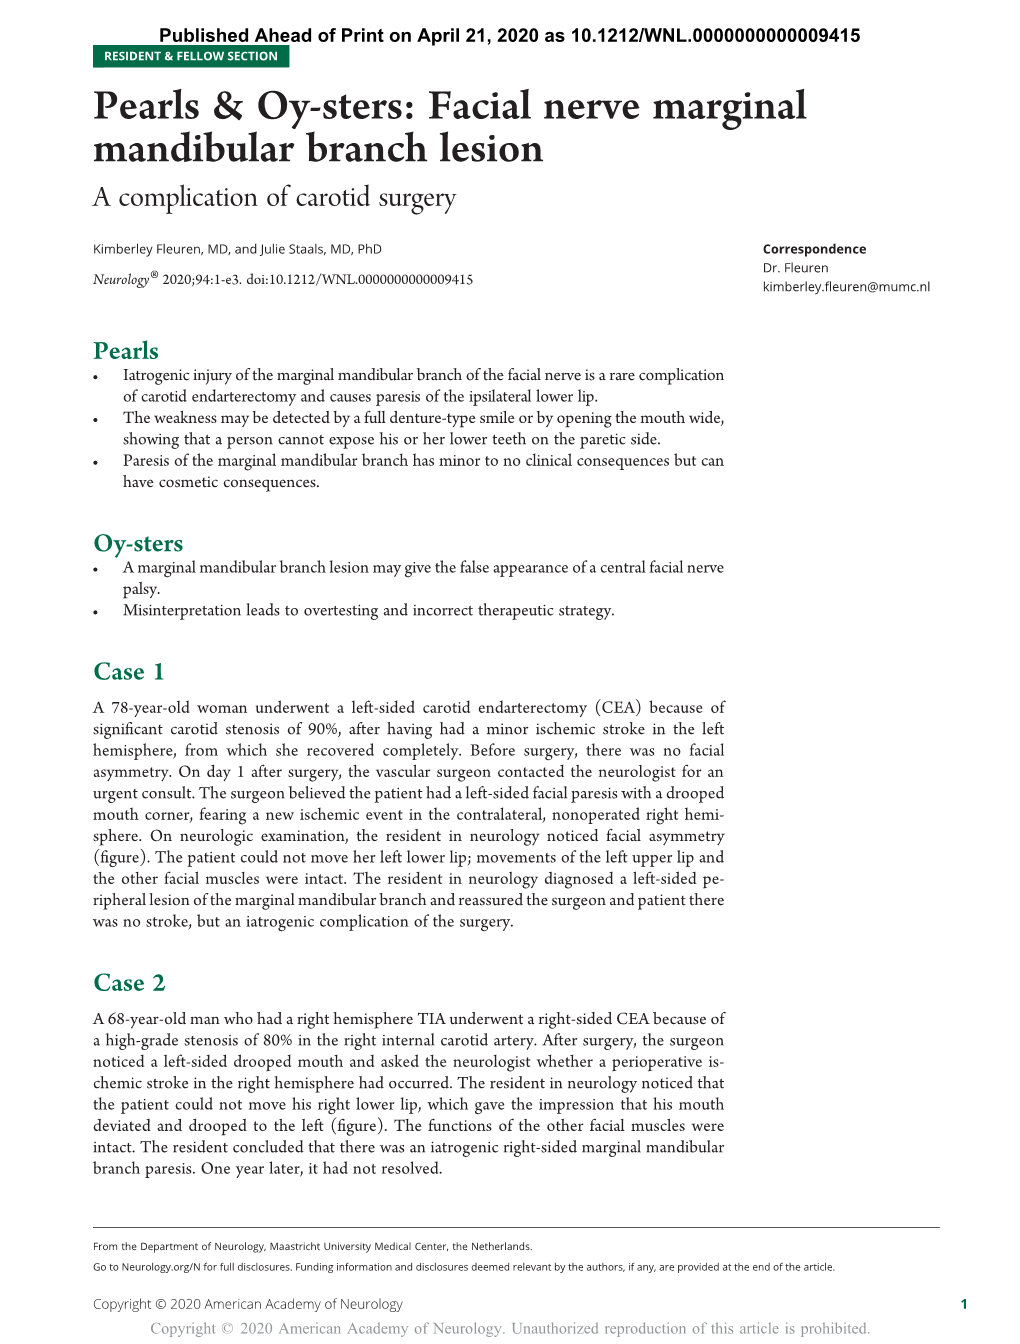 Facial Nerve Marginal Mandibular Branch Lesion a Complication of Carotid Surgery